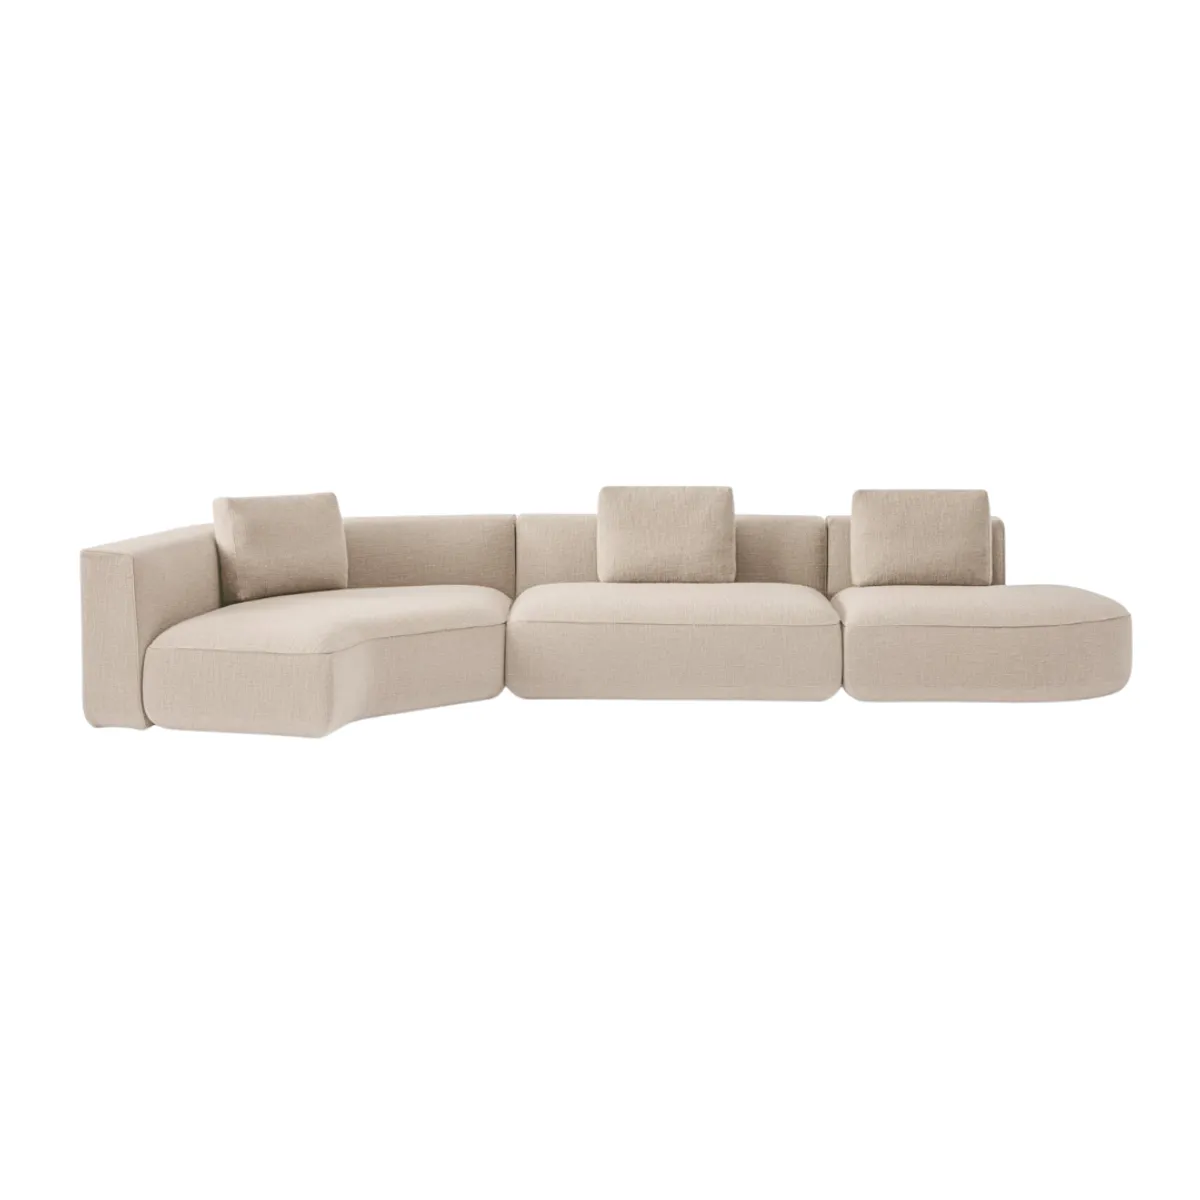 Jeff modular corner sofa 2